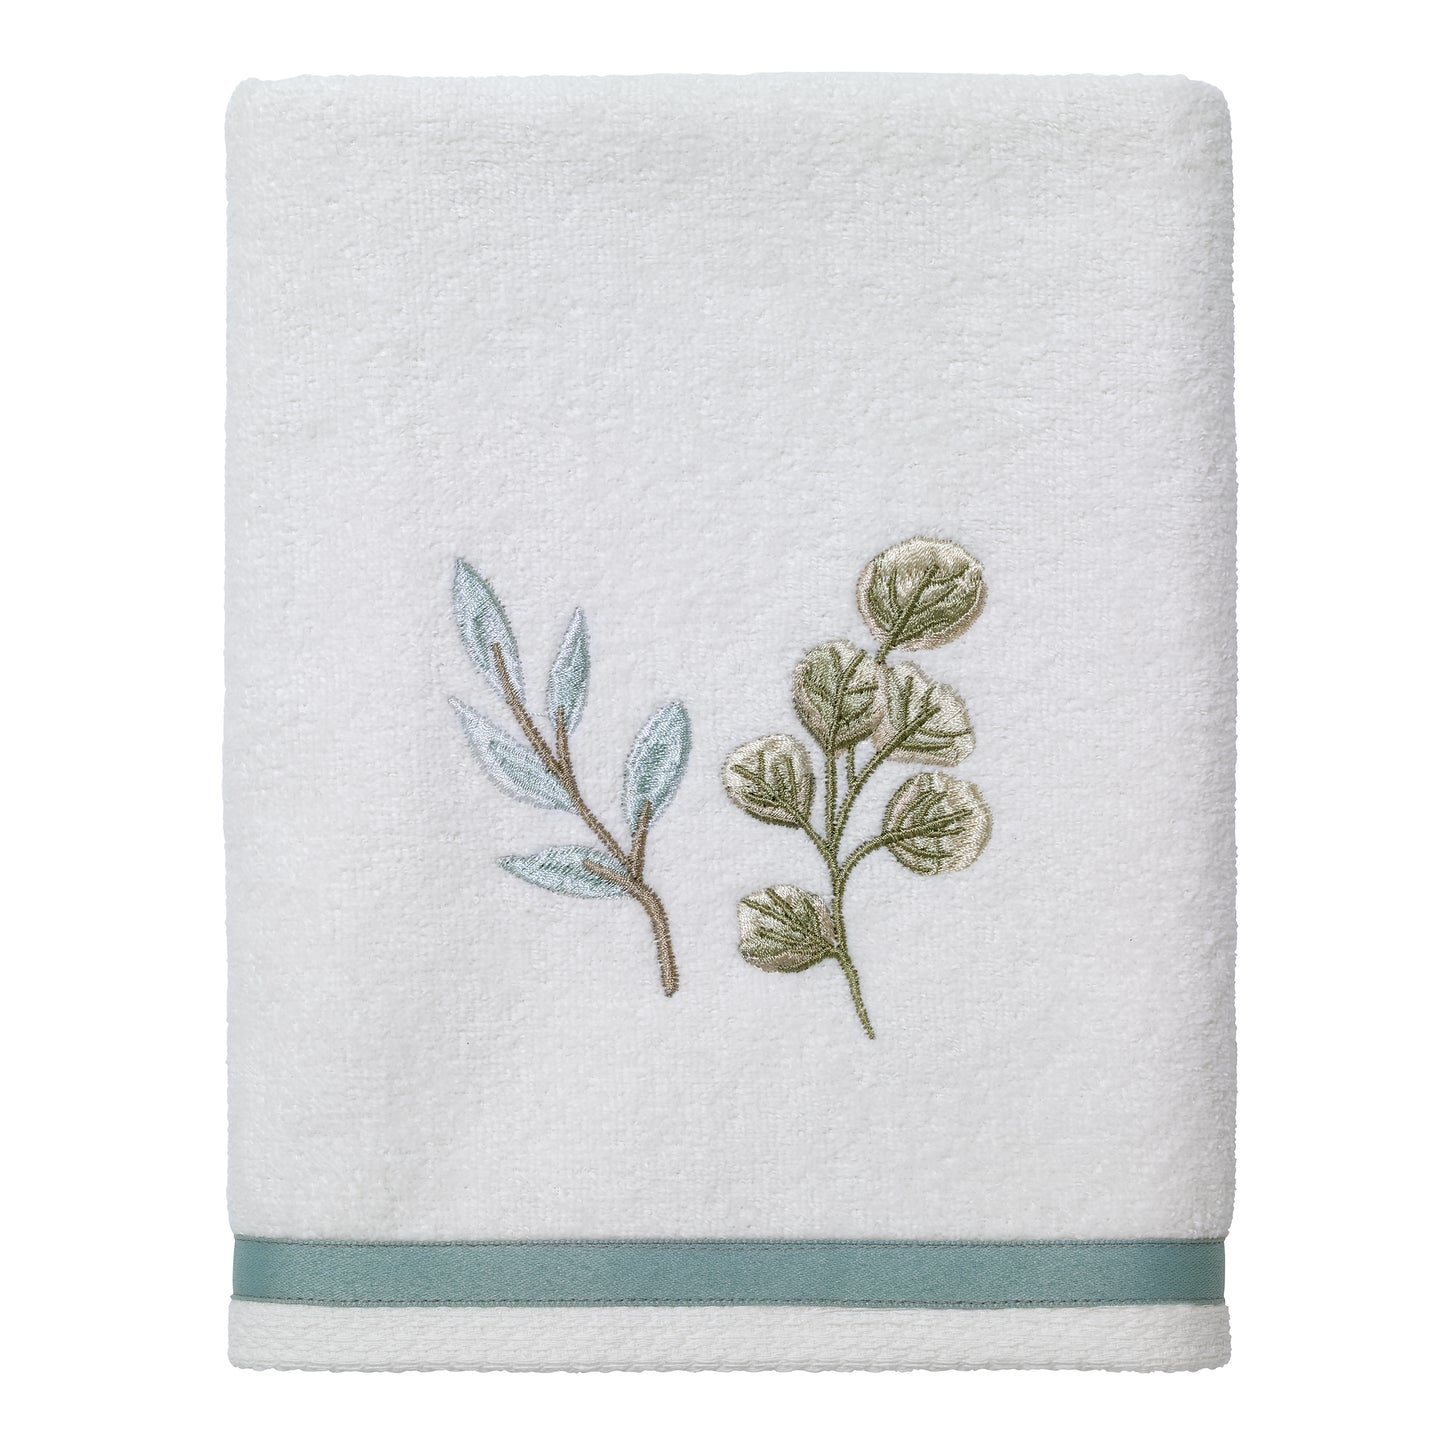 Avanti Linens Ombre Hand Towel - White